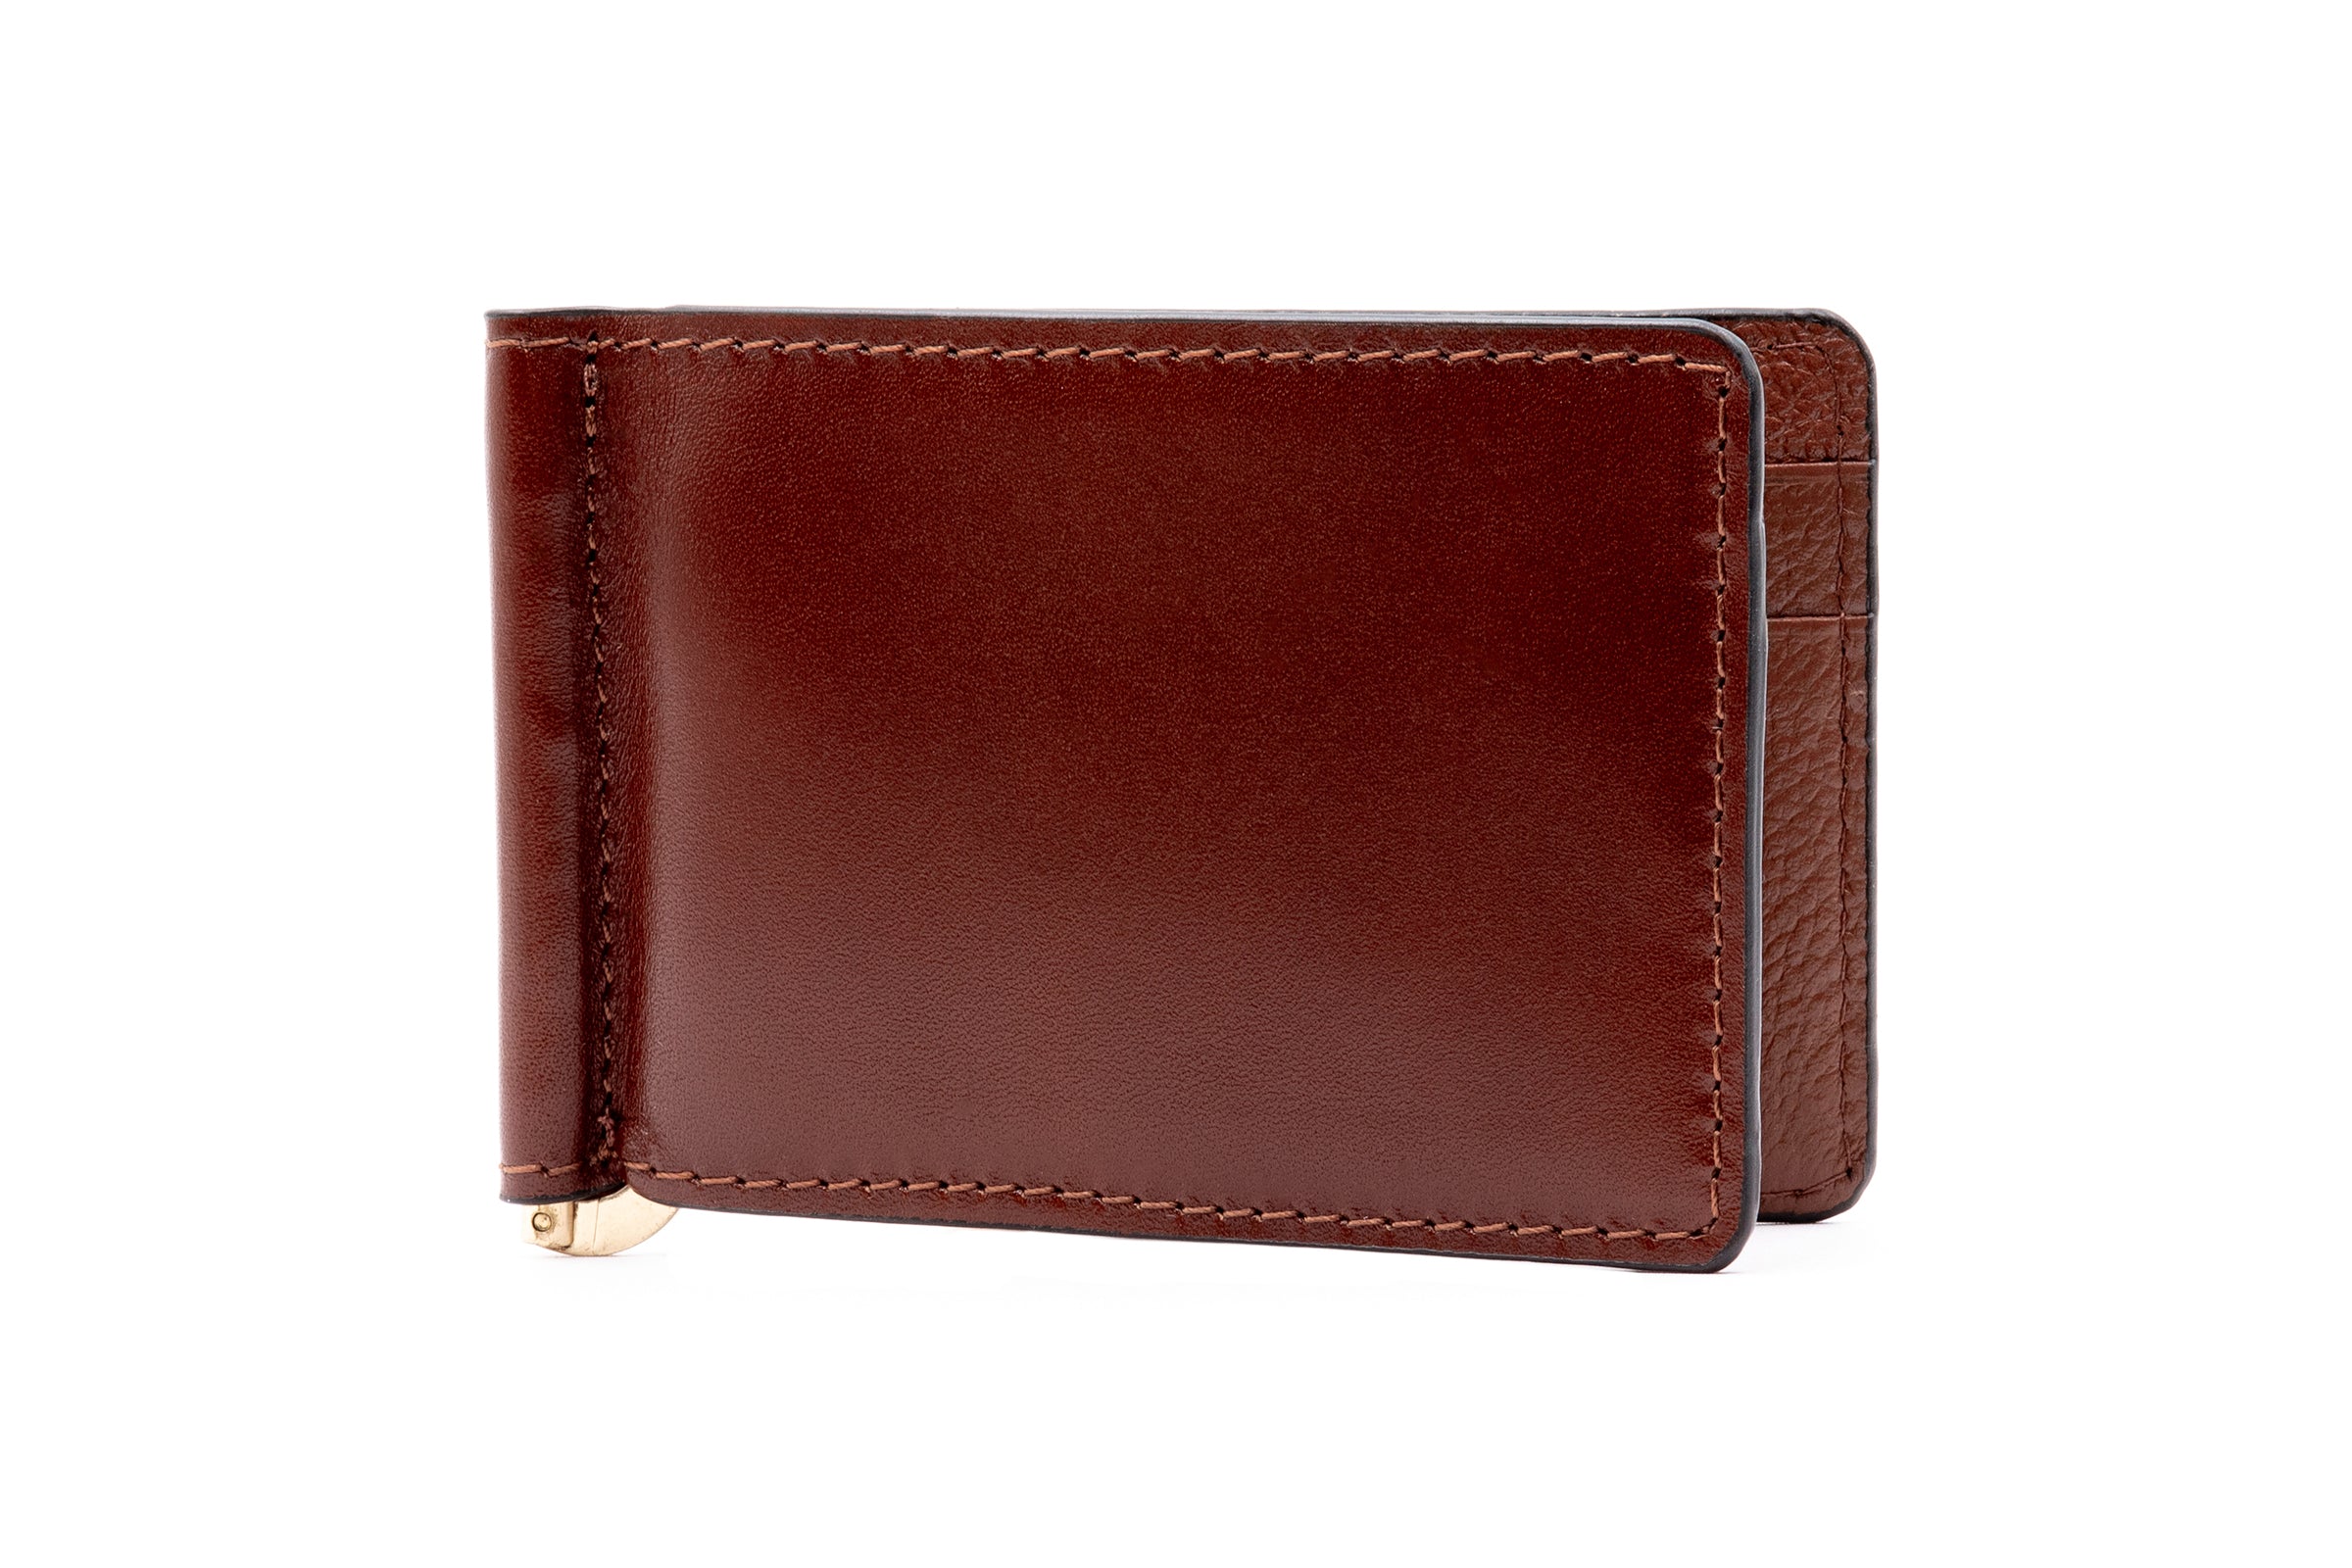 Edward Saddle Leather Credit Card Money Clip - Saddle Tan